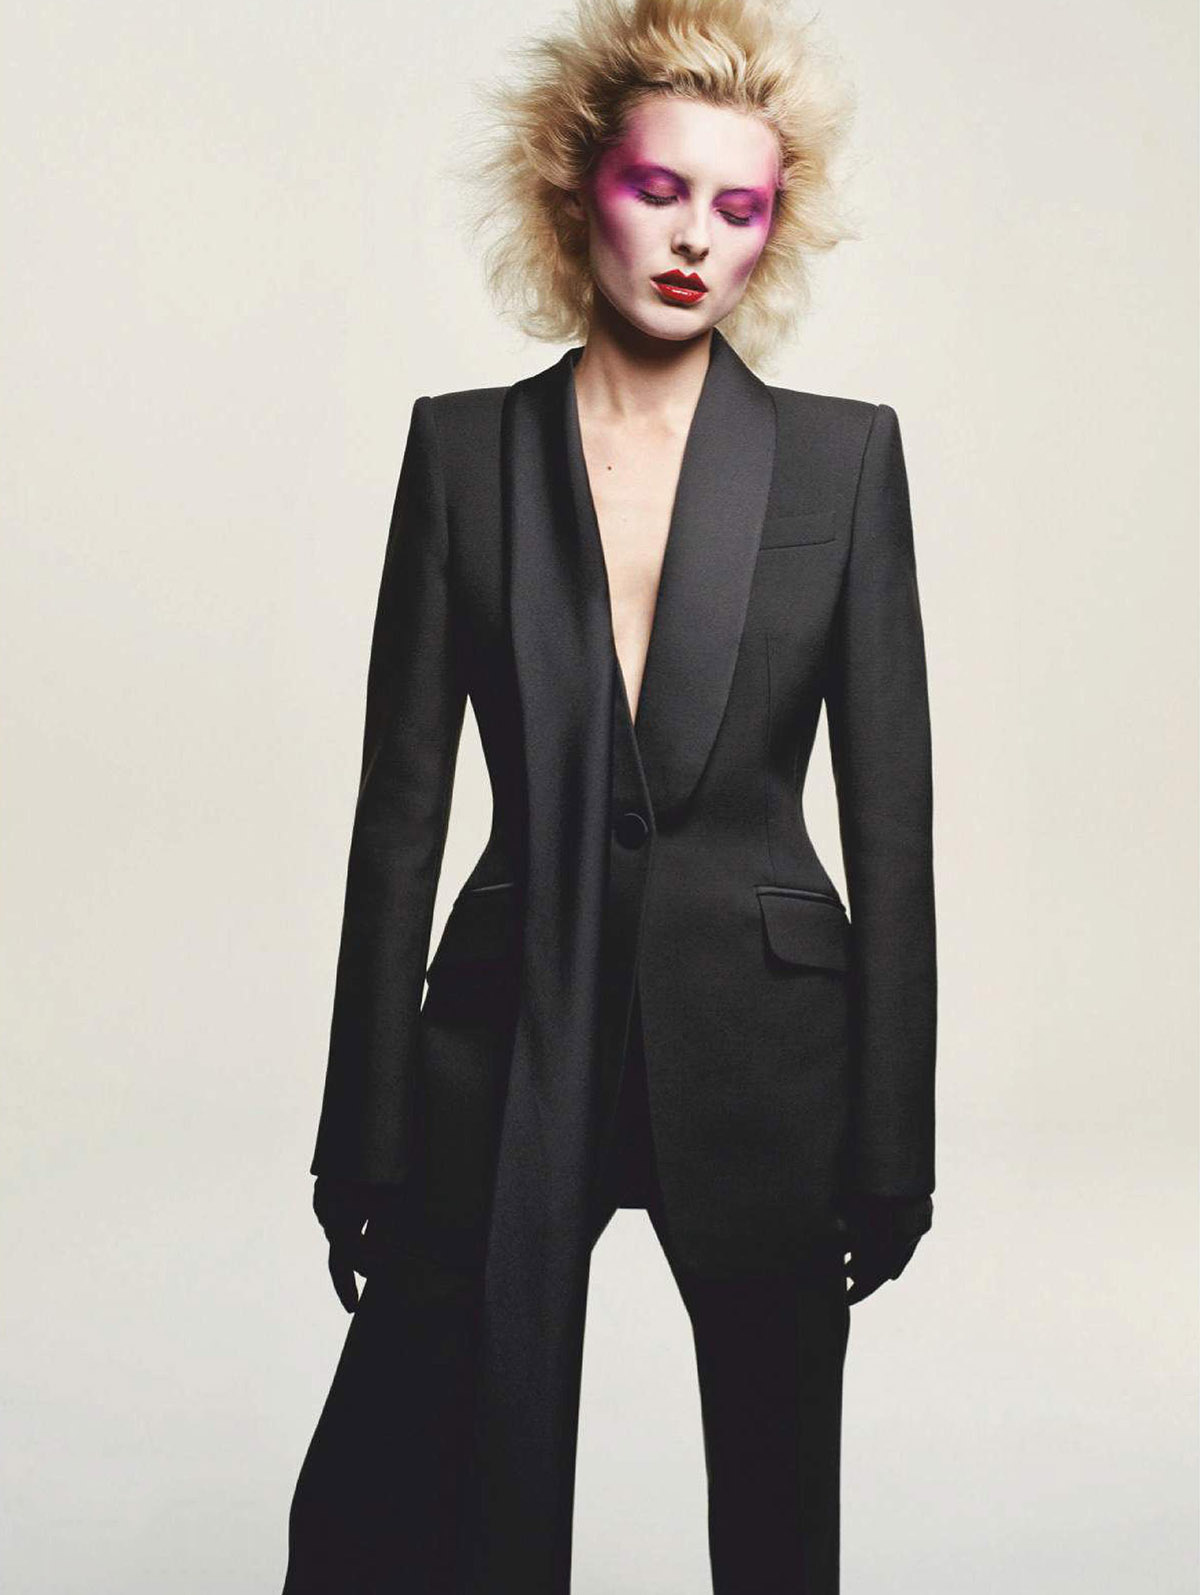 Quinn Mora covers Vogue Paris March 2021 by David Sims